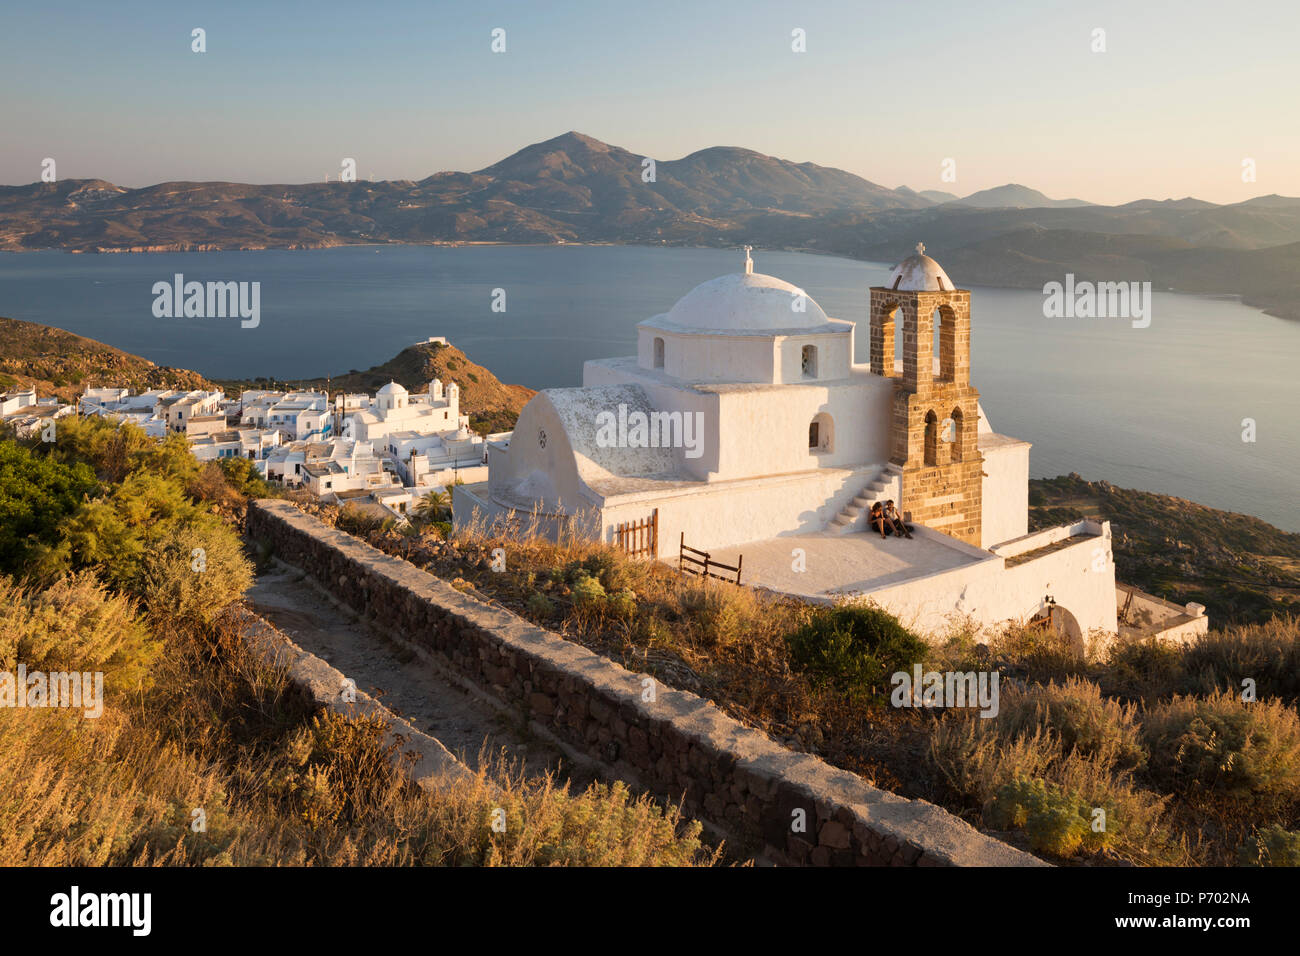 View of Plaka with Greek Orthodox church and Milos Bay from Plaka Castle, Milos, Cyclades, Aegean Sea, Greek Islands, Greece, Europe Stock Photo